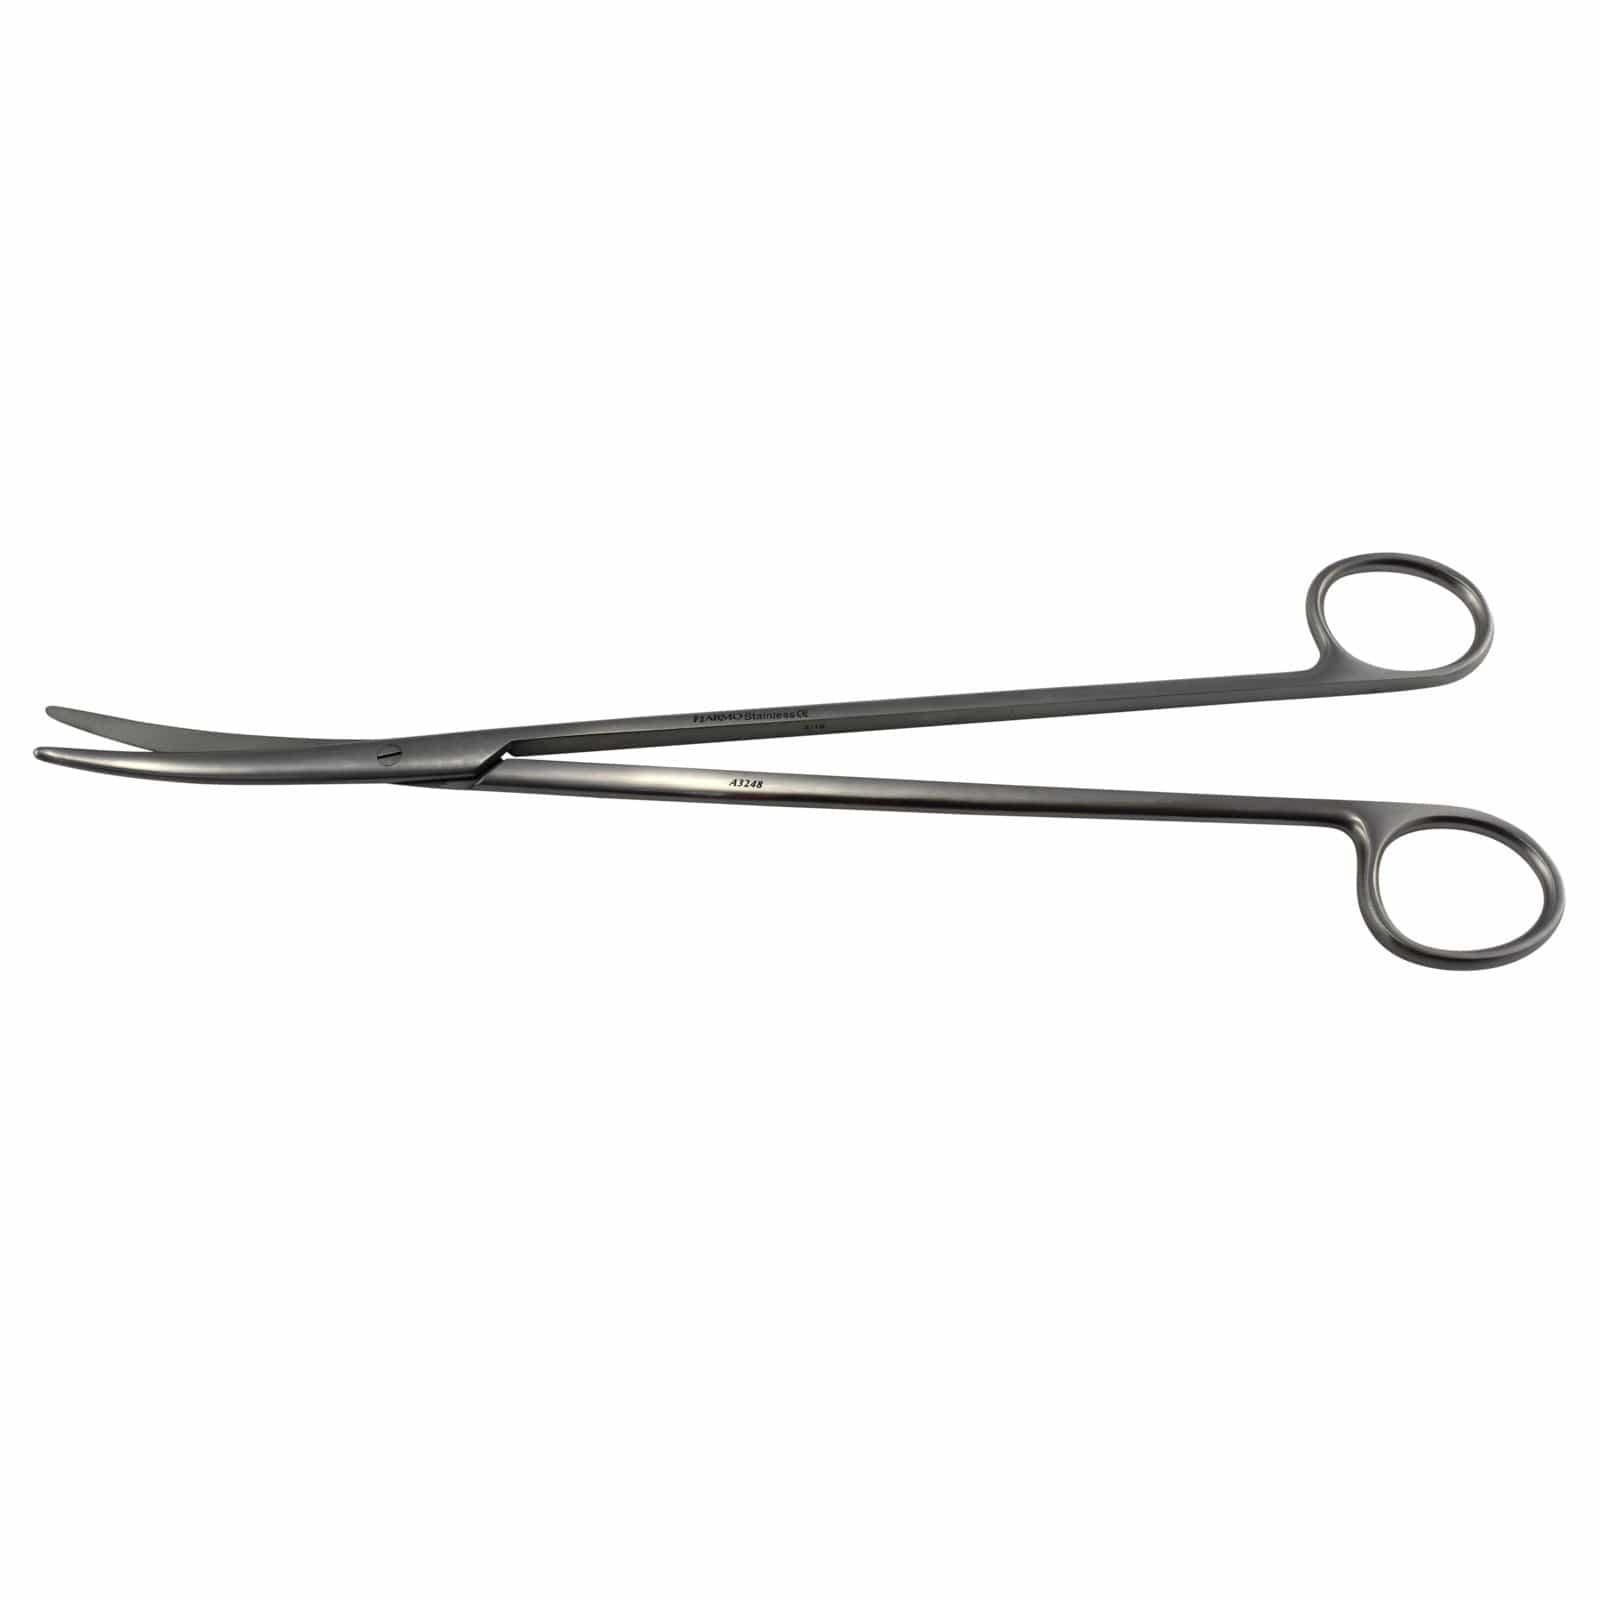 Armo Surgical Instruments 28cm / Curved / Blunt/Blunt Armo Metzenbaum Scissors